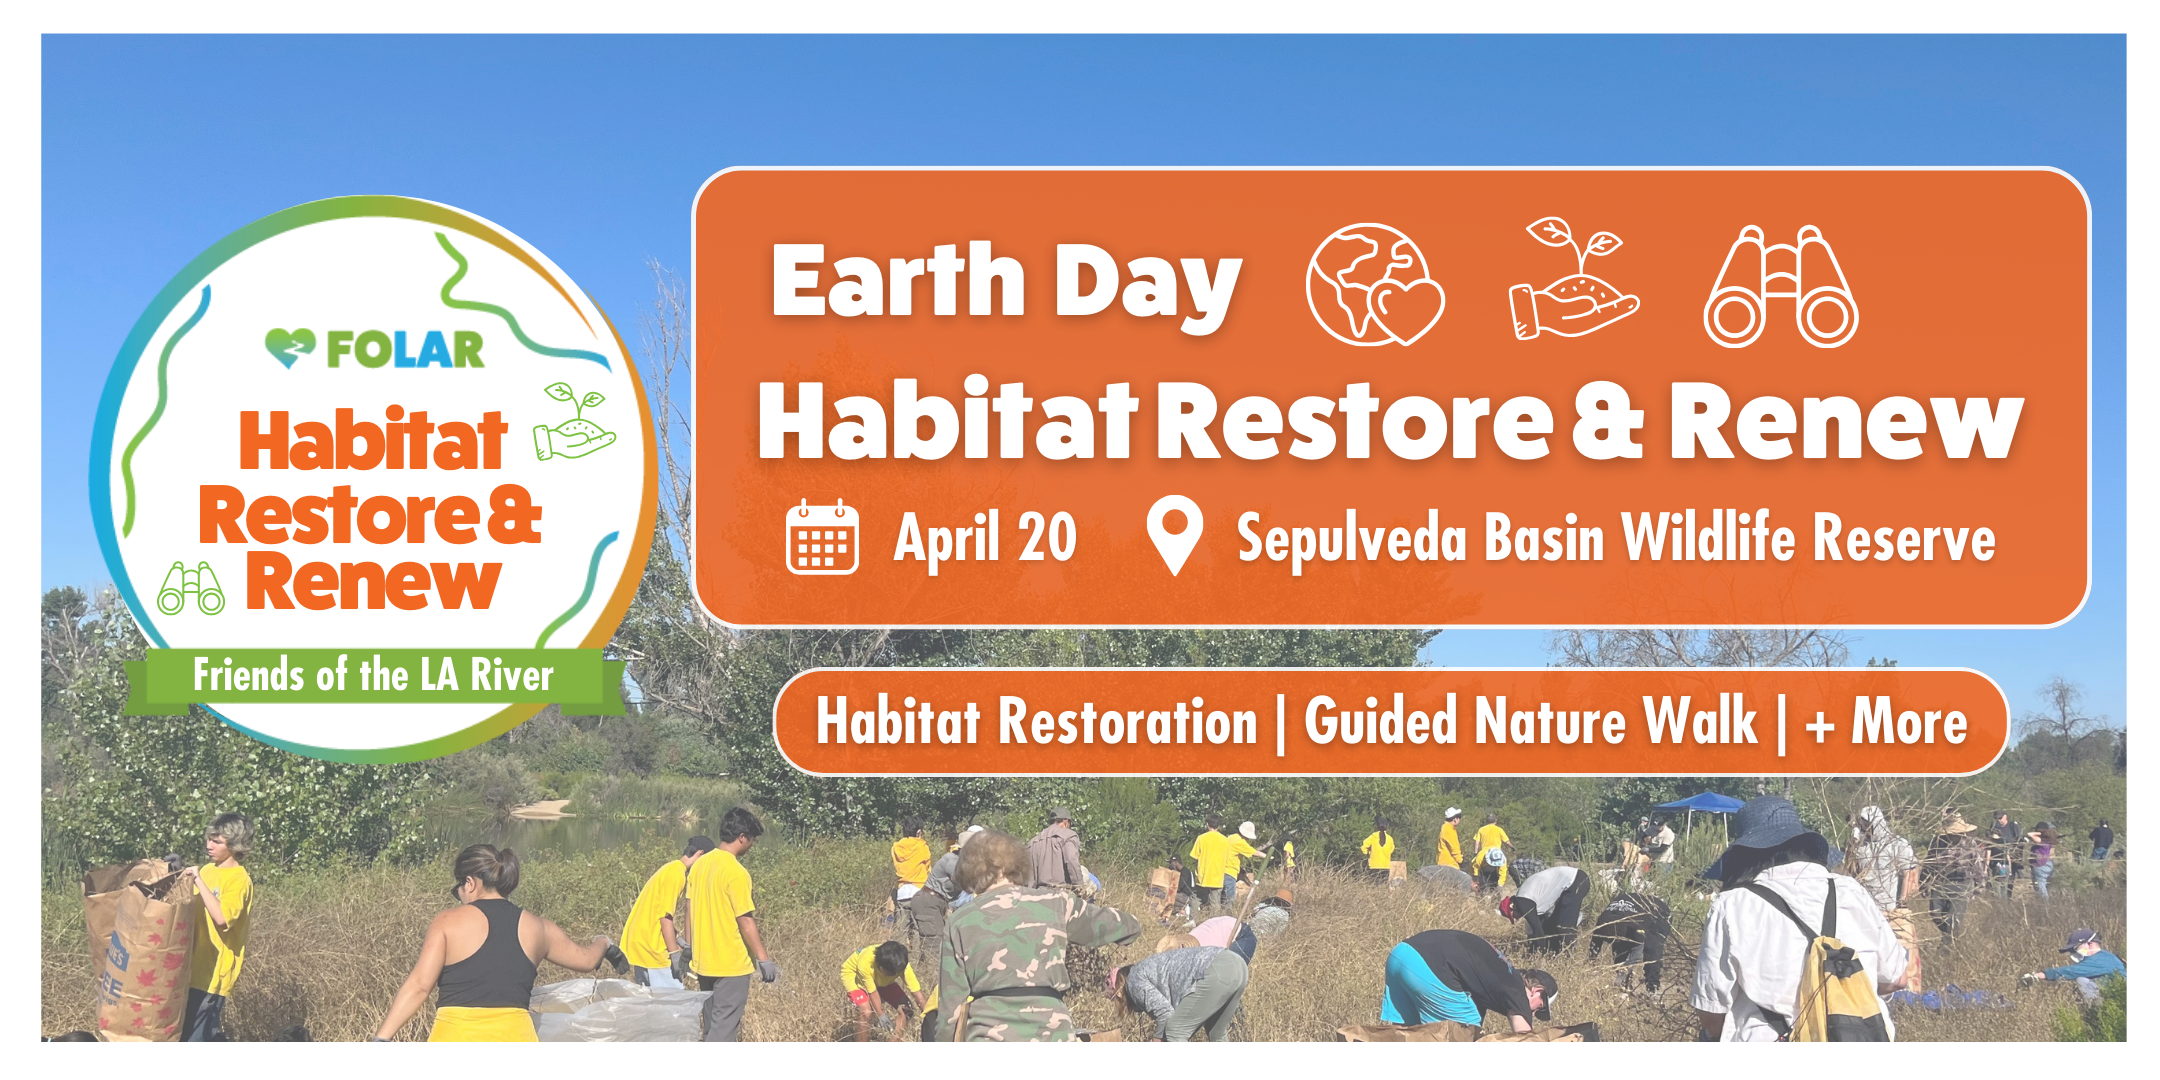 Earth Day Habitat Restore & Renew